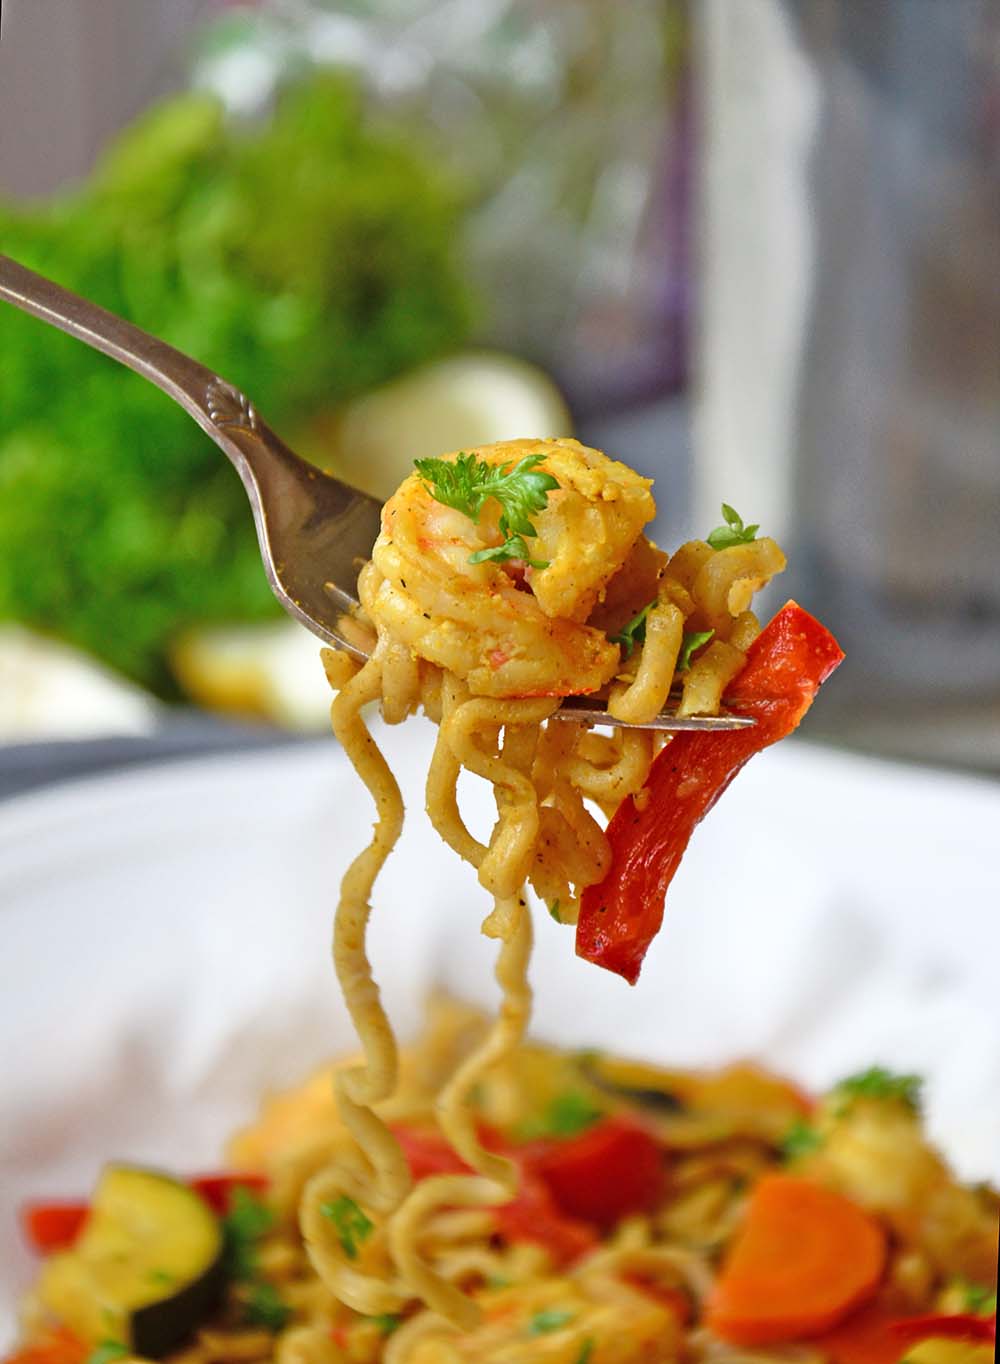 Shrimp & vegetable stir fry with honey chili sauce